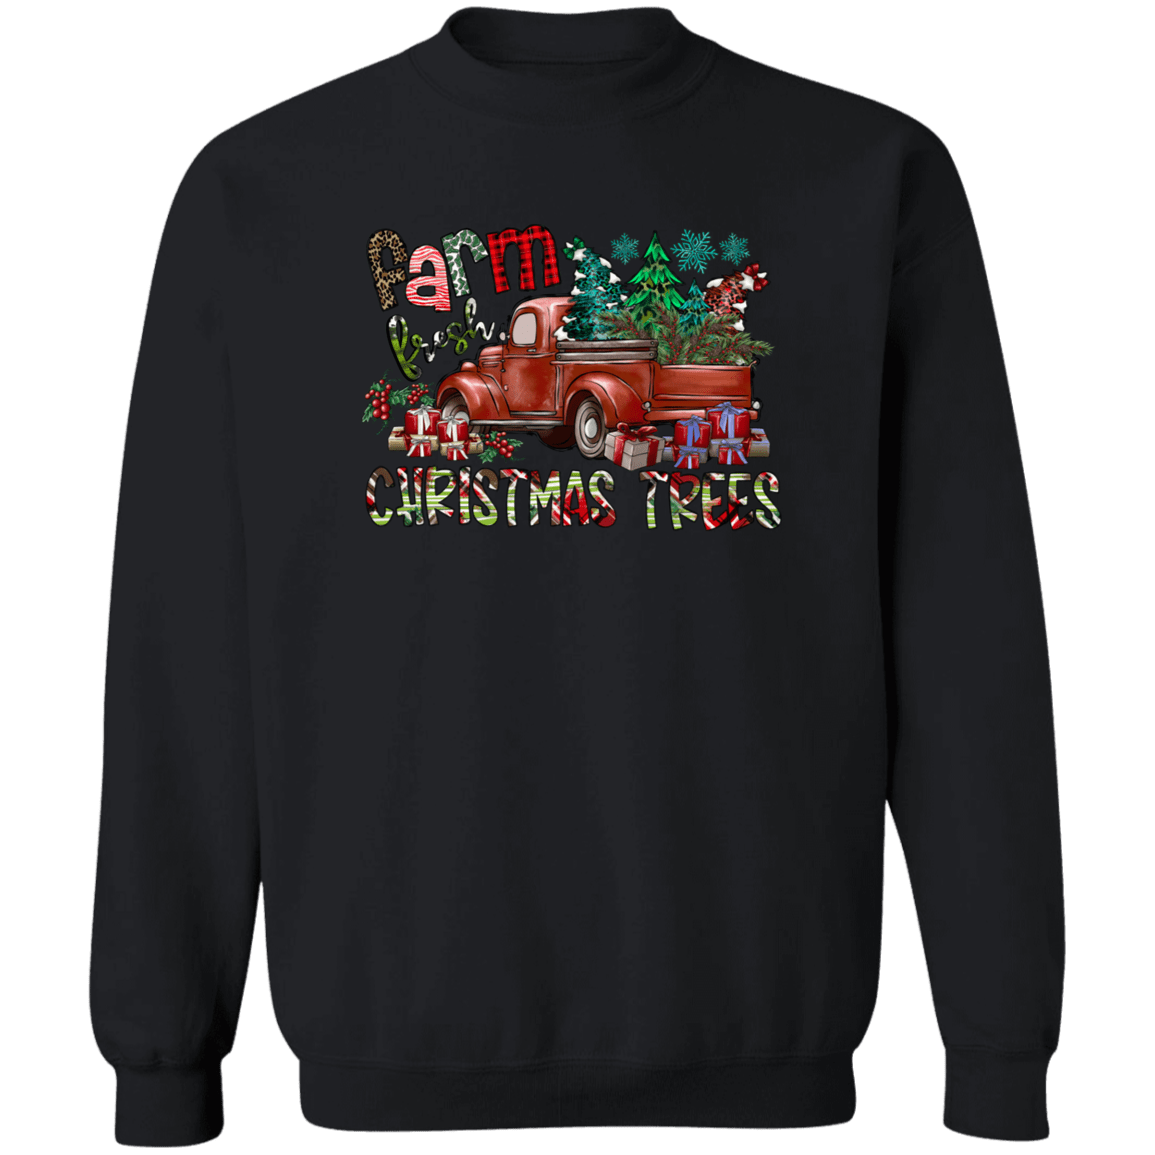 Farm Fresh Christmas Crewneck Pullover Sweatshirt